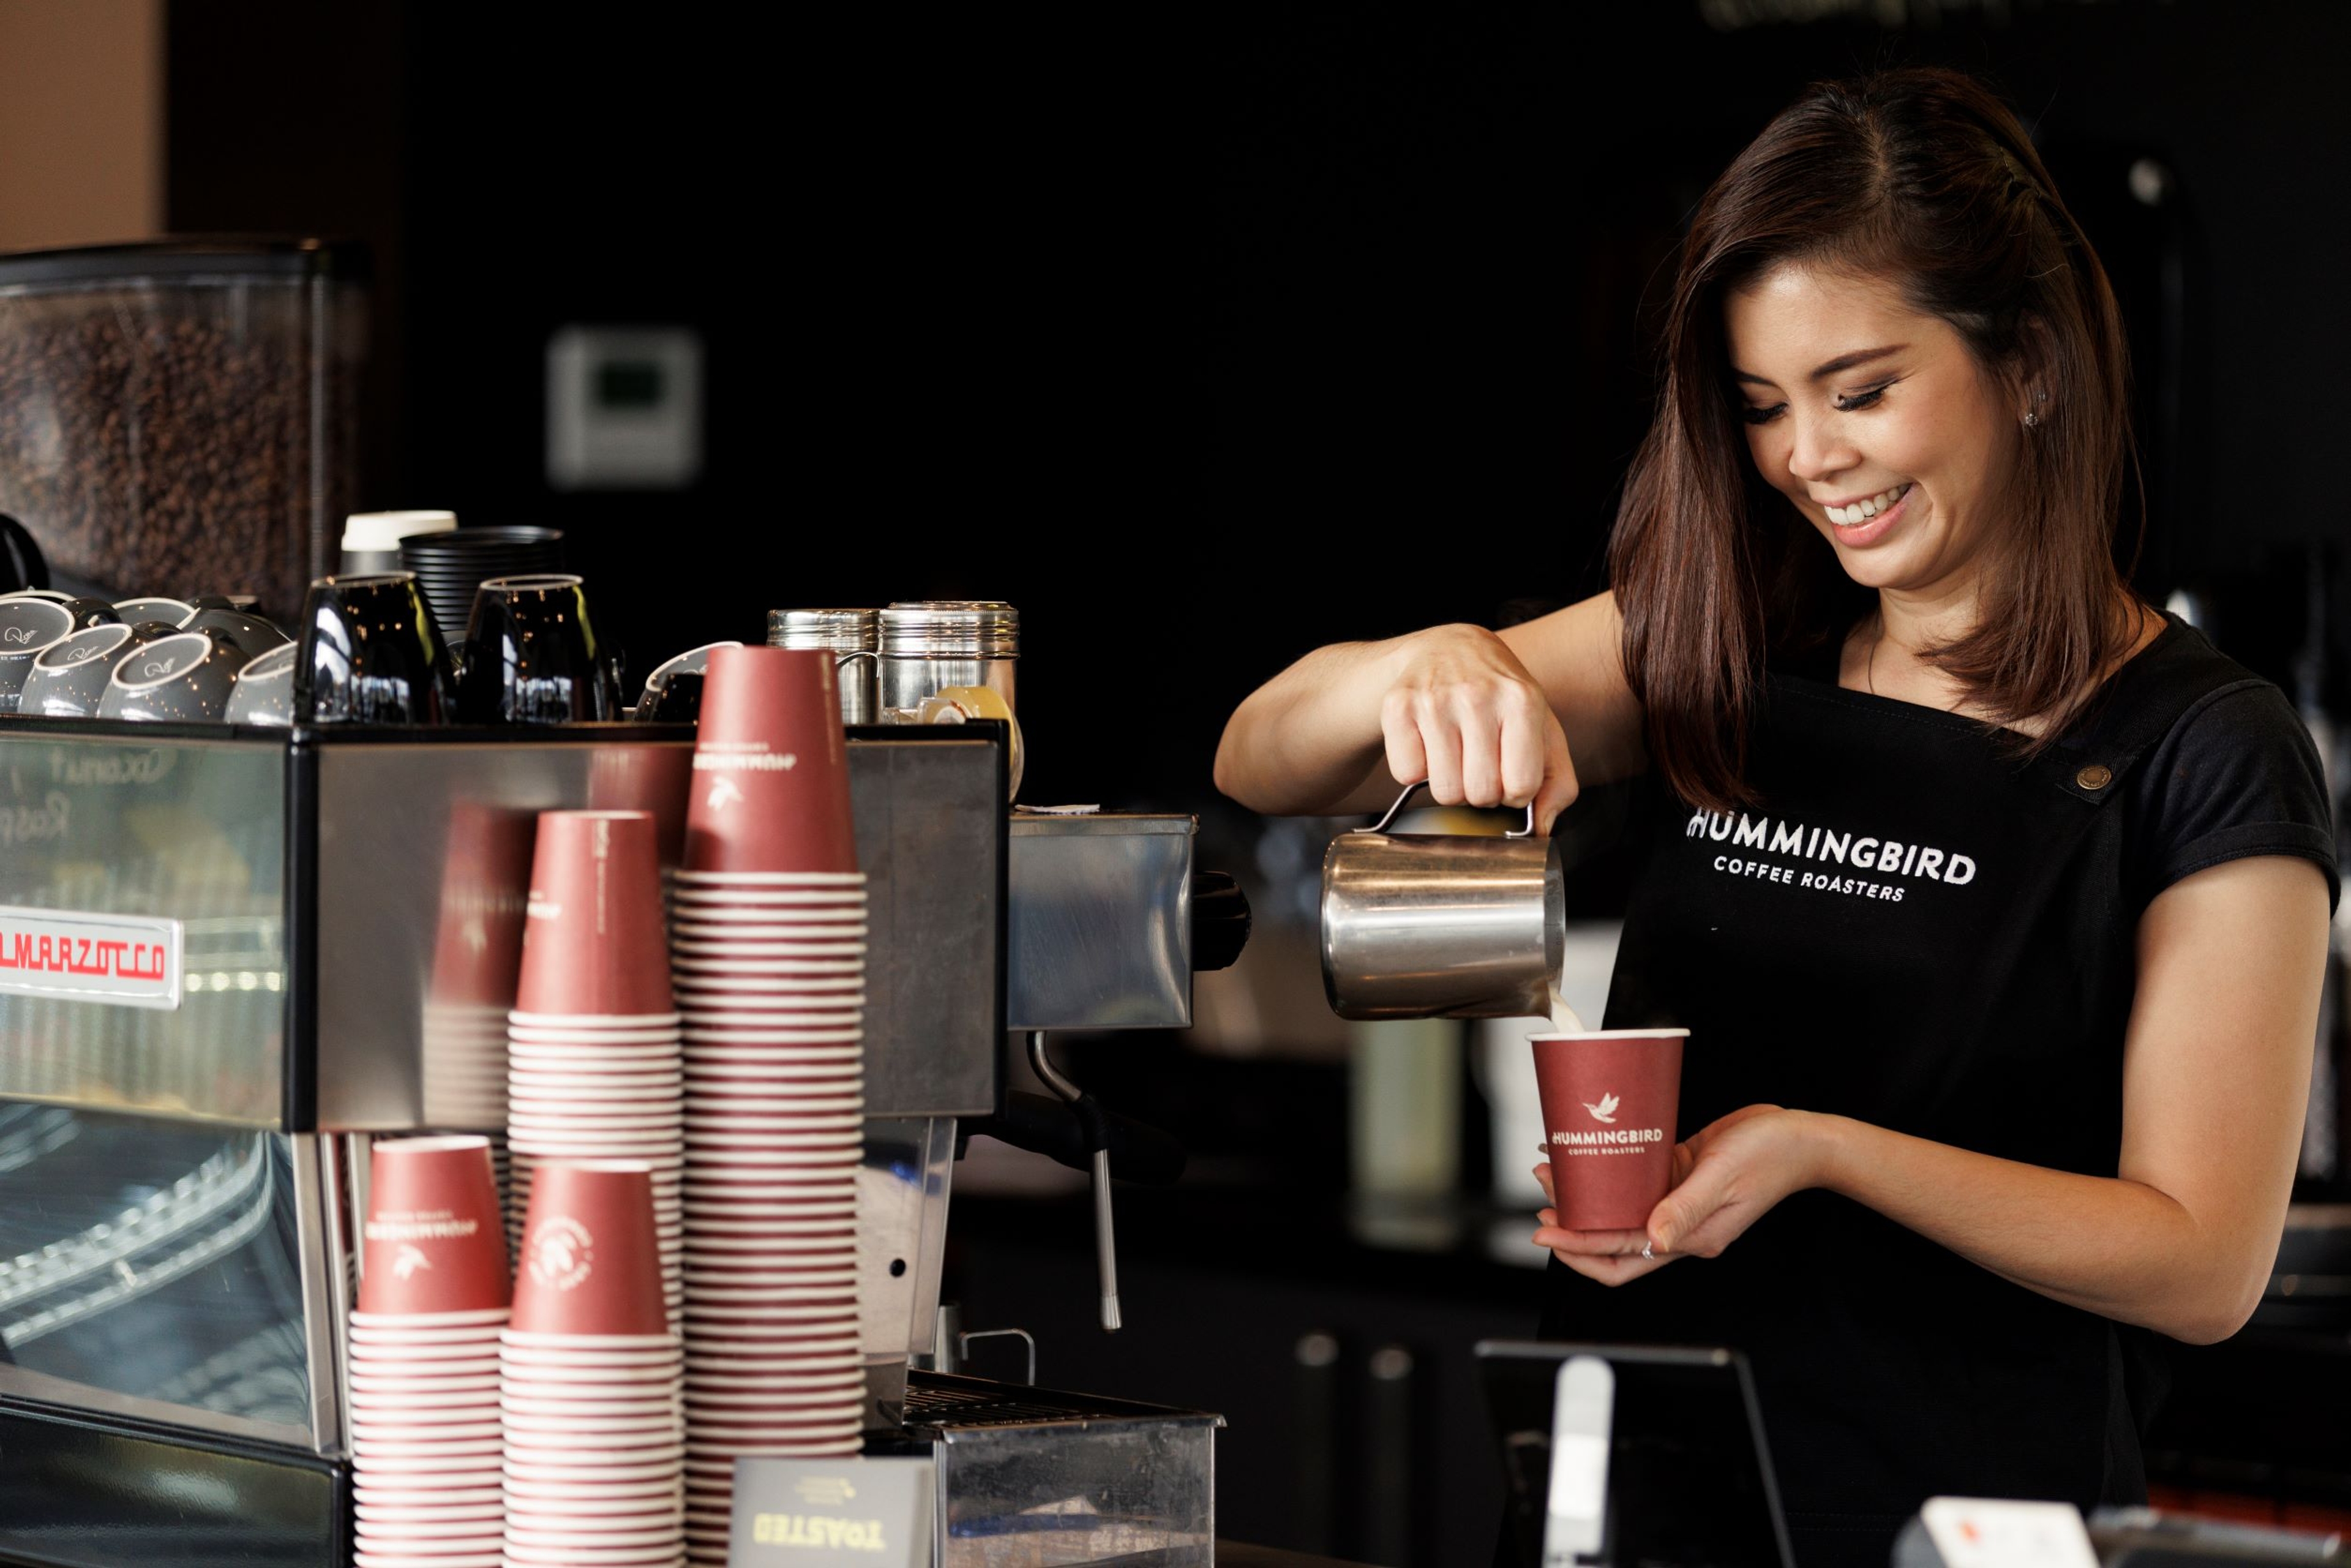 Promoting New Zealand’s biggest fresh coffee brand 